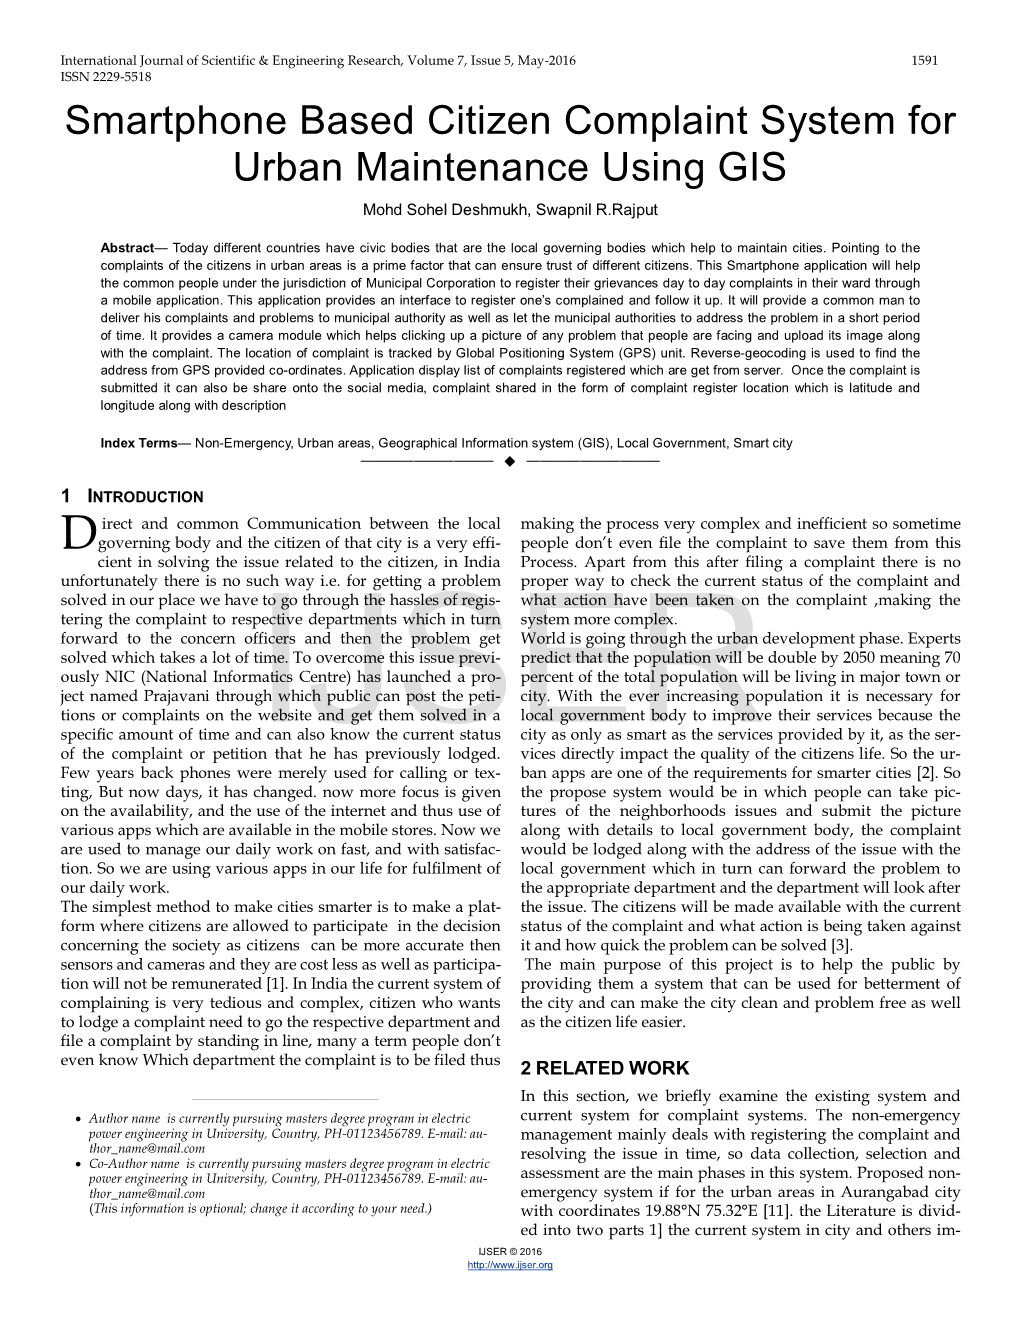 Smartphone Based Citizen Complaint System for Urban Maintenance Using GIS Mohd Sohel Deshmukh, Swapnil R.Rajput